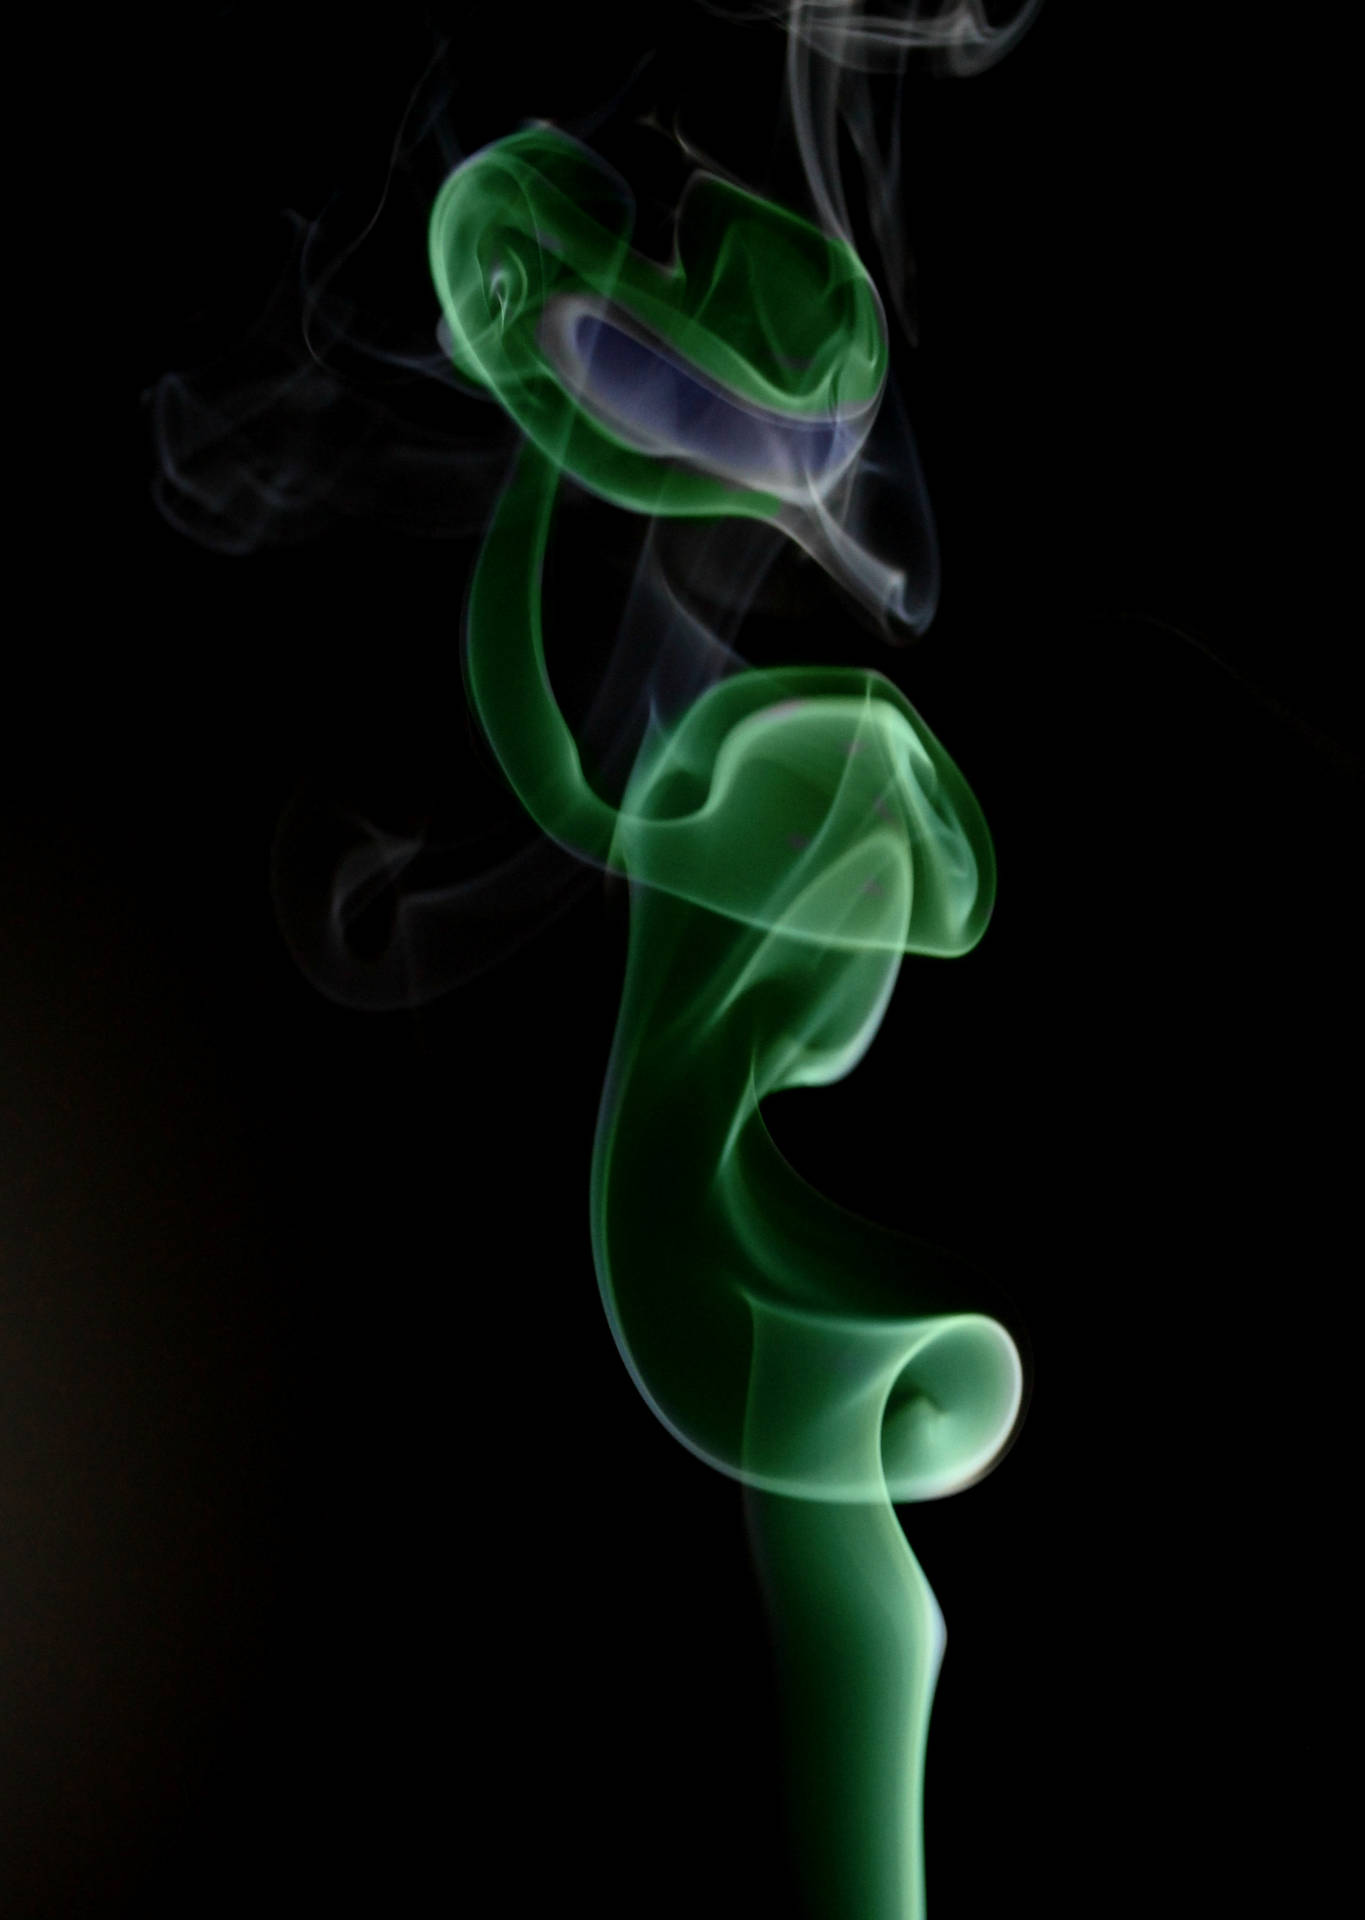 Smoke 2284X3213 Wallpaper and Background Image